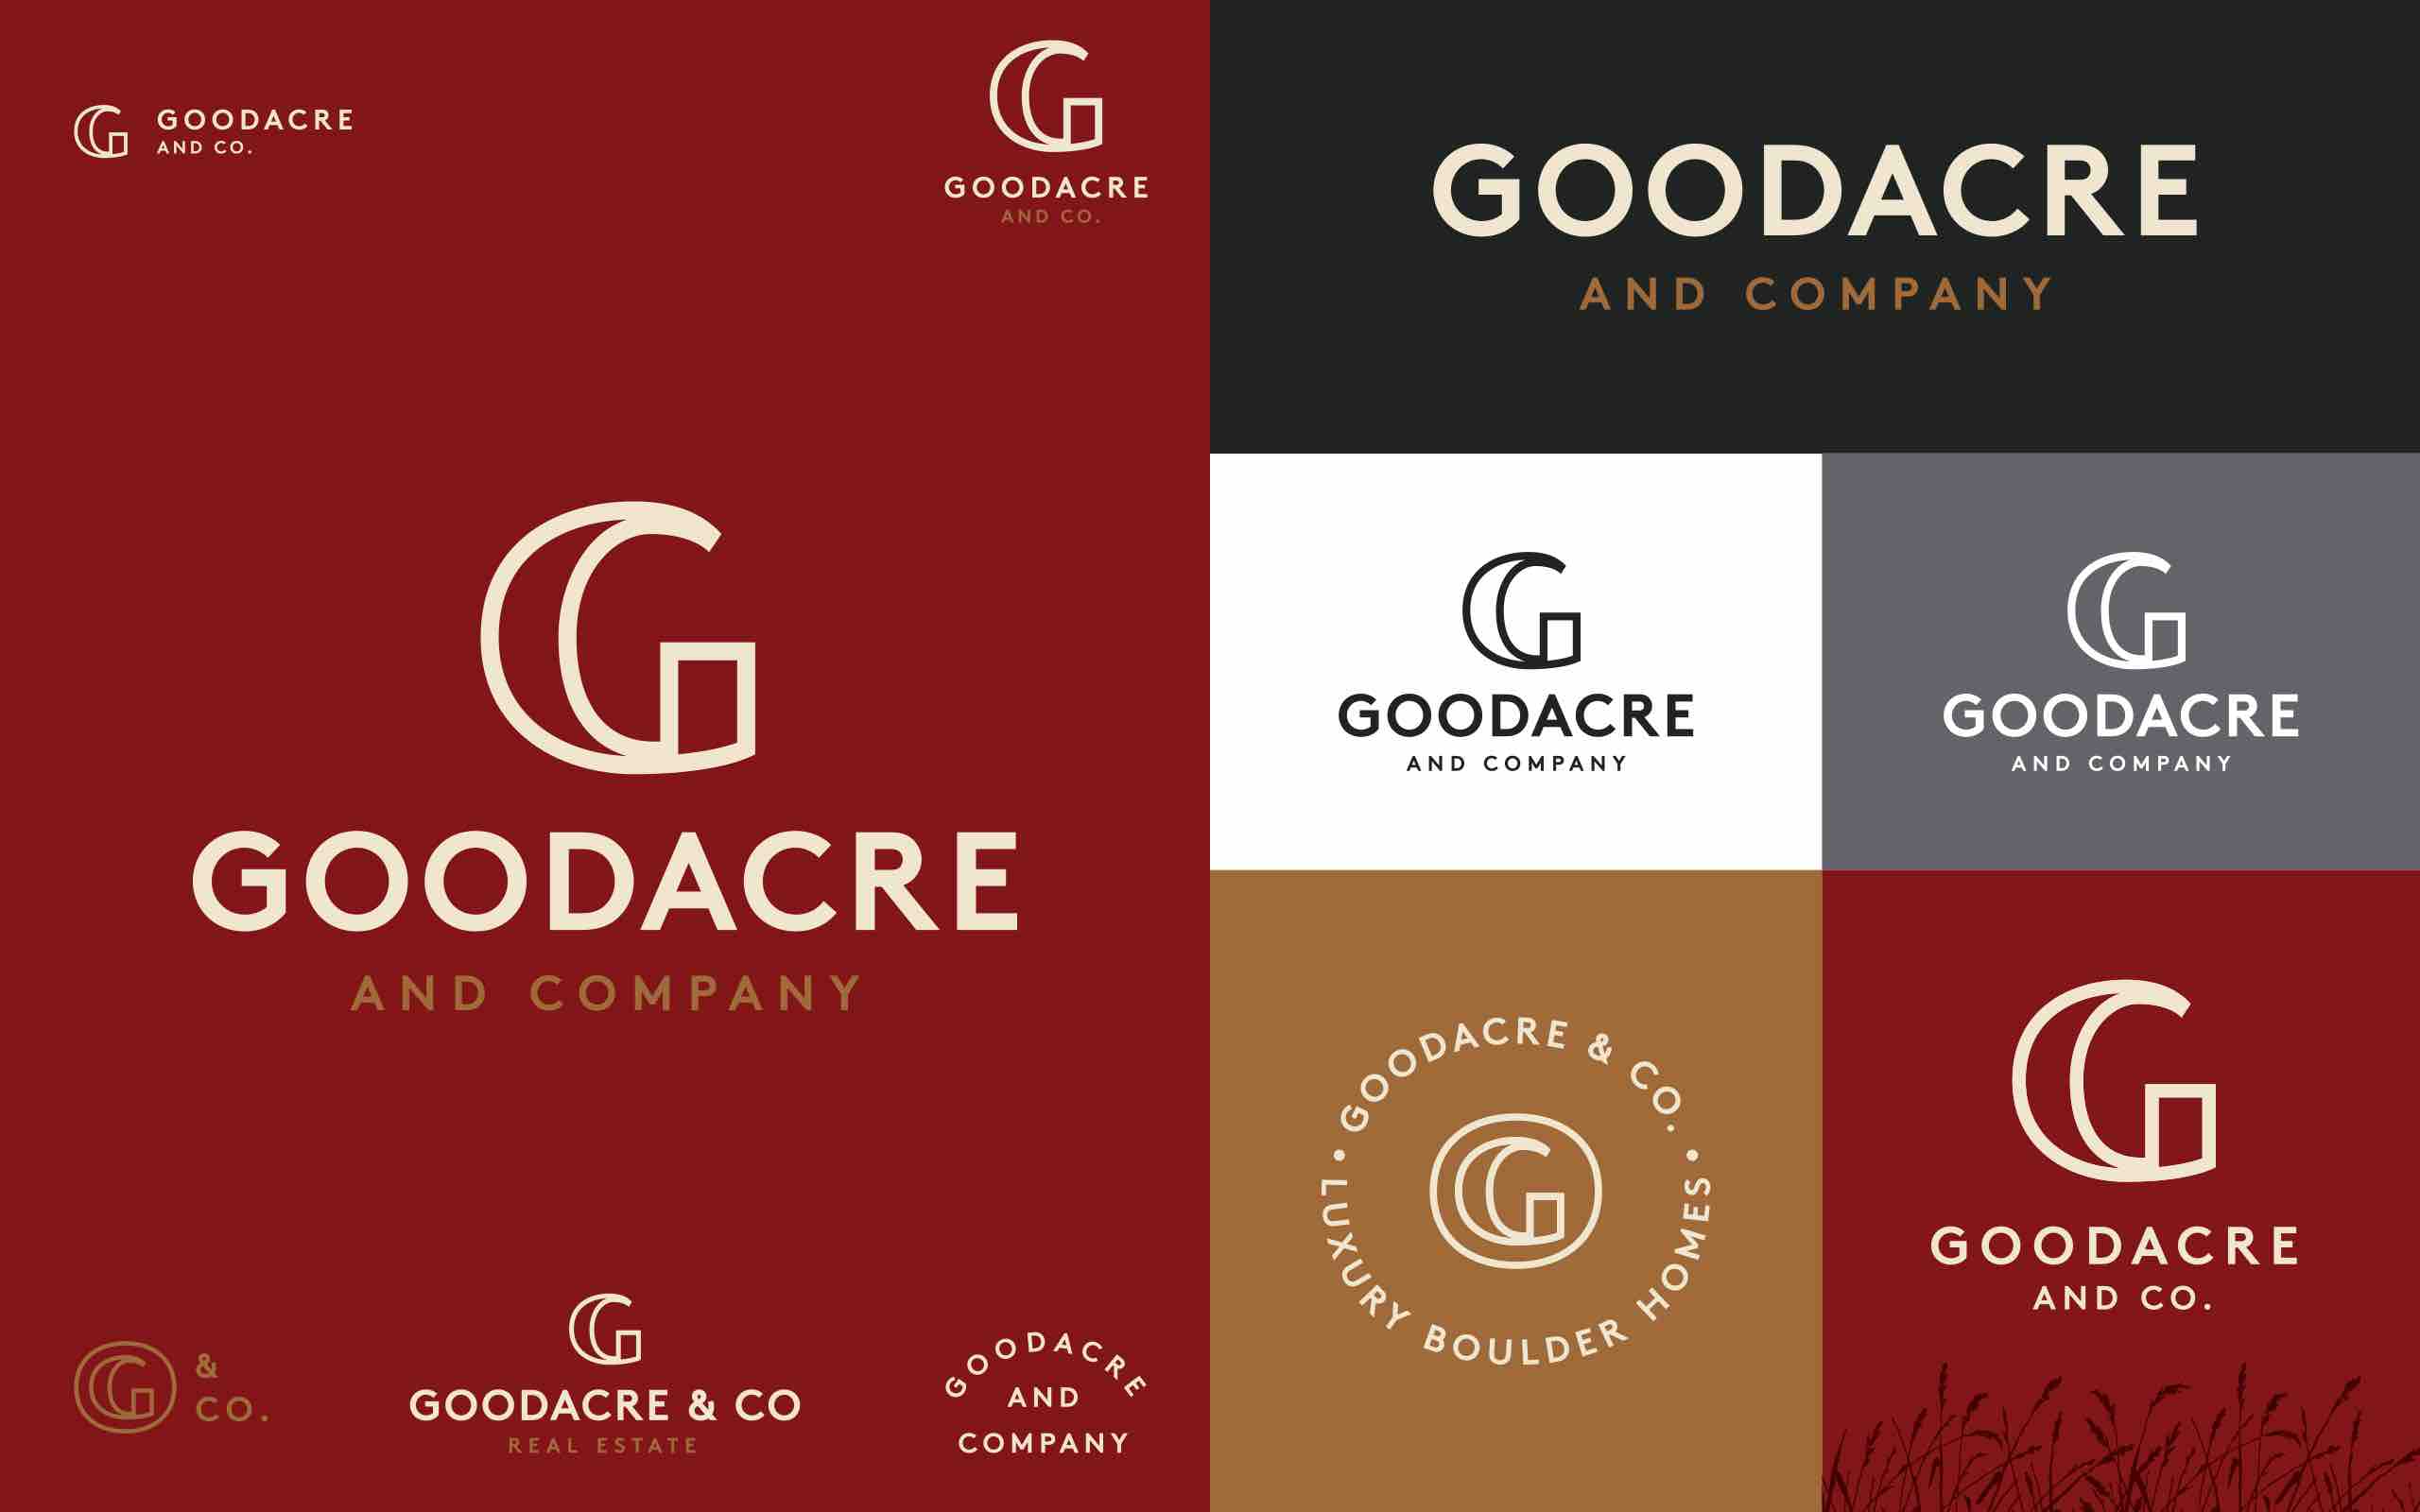 Goodacre-Brand-identity-System-by-anthem-branding